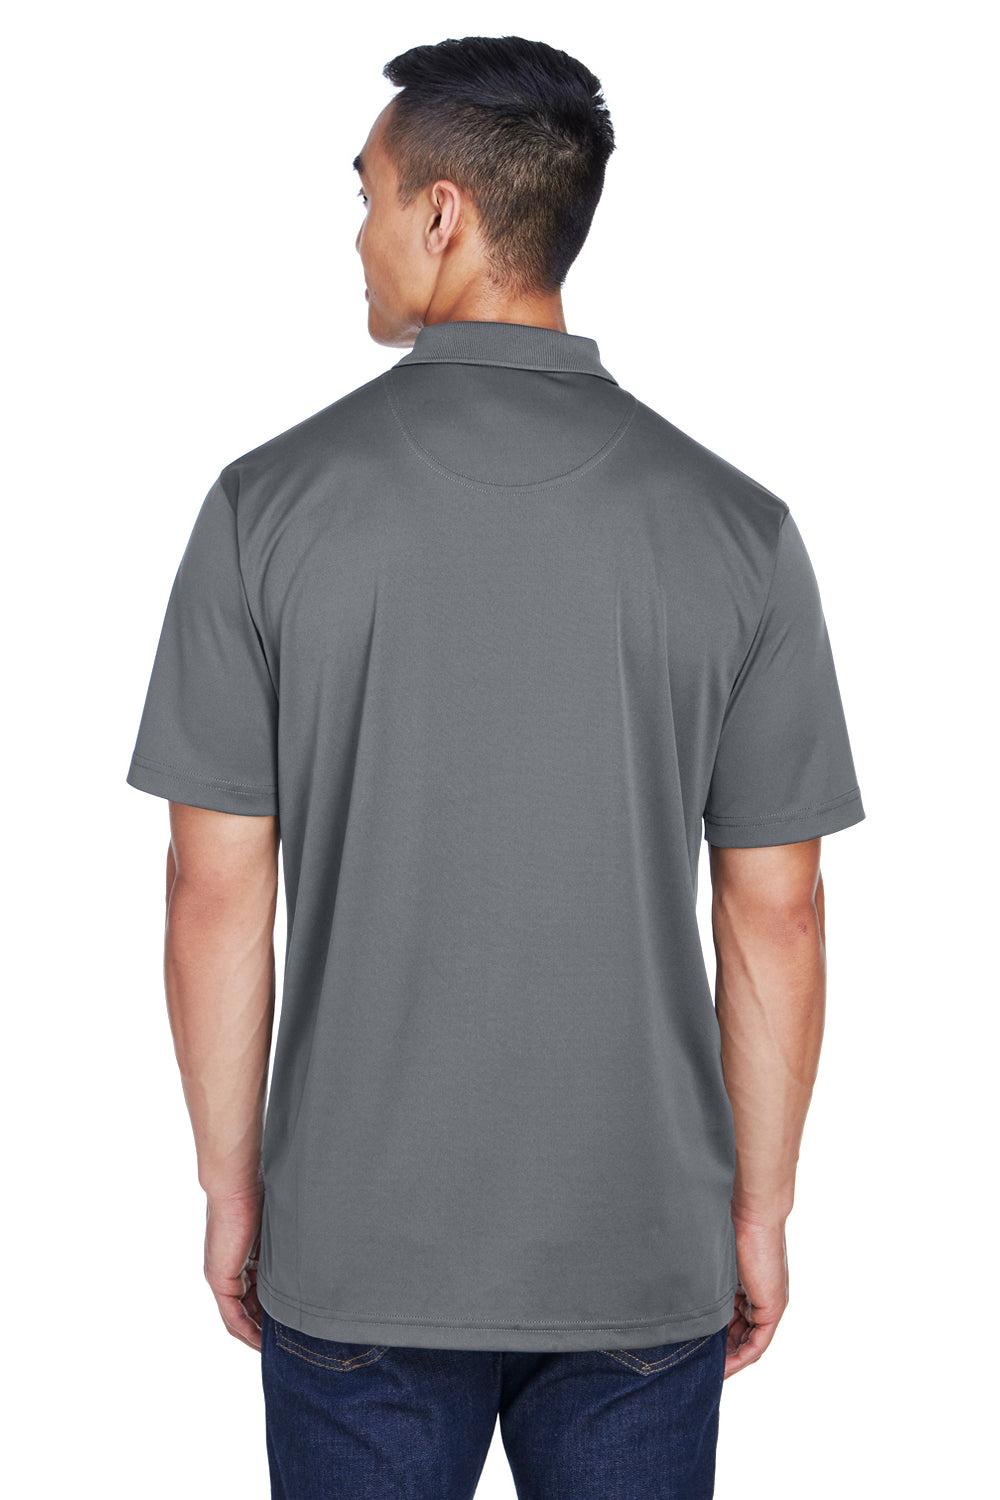 UltraClub 8405 Mens Cool & Dry Moisture Wicking Short Sleeve Polo Shirt Charcoal Grey Back